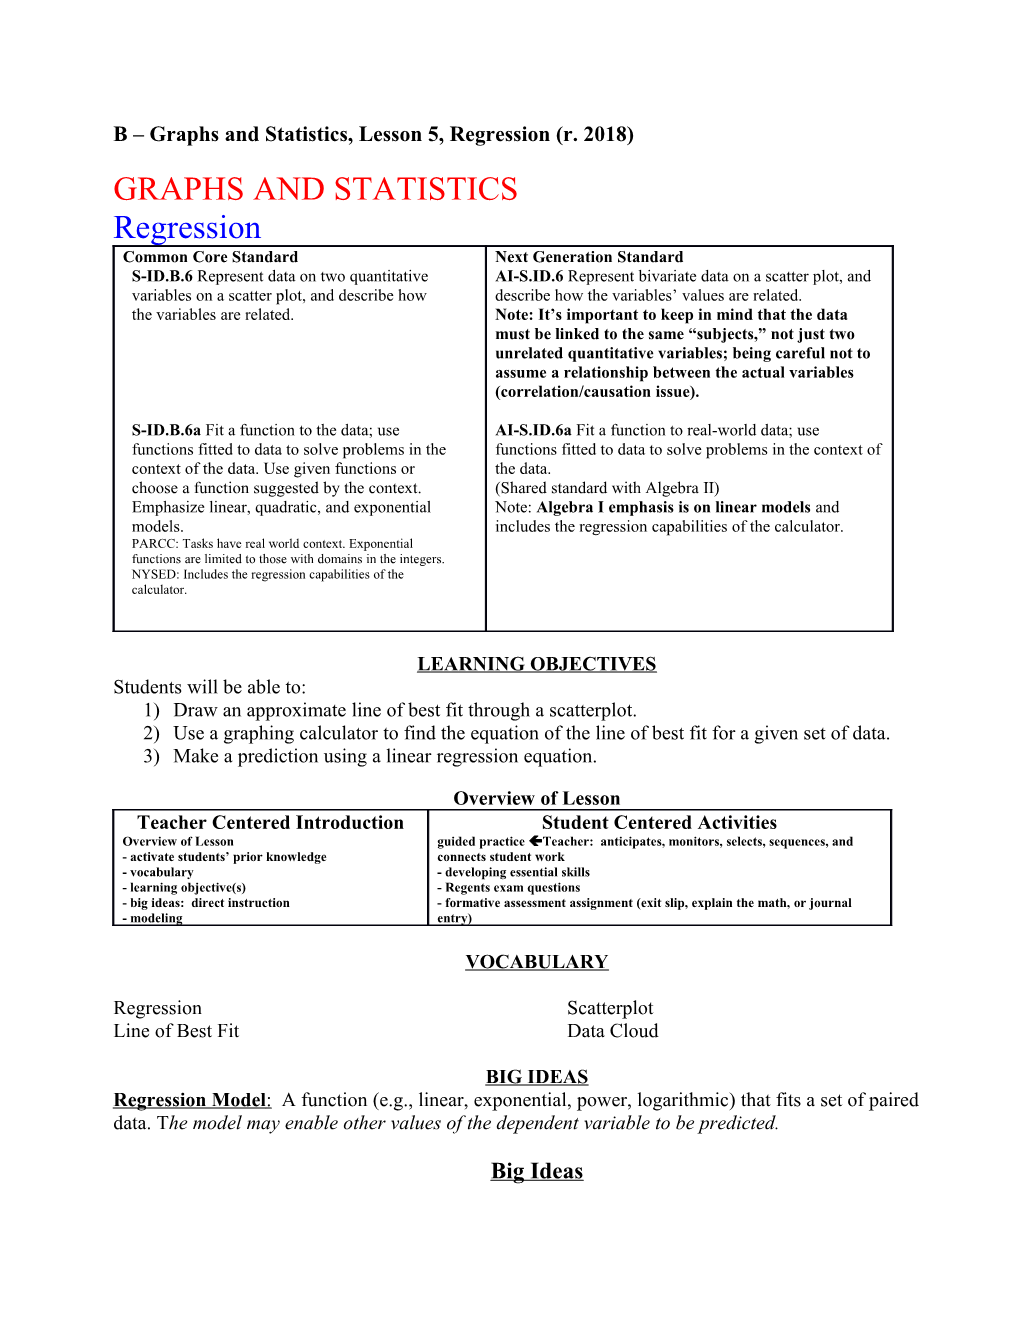 B Graphs and Statistics, Lesson 5, Regression(R. 2018)